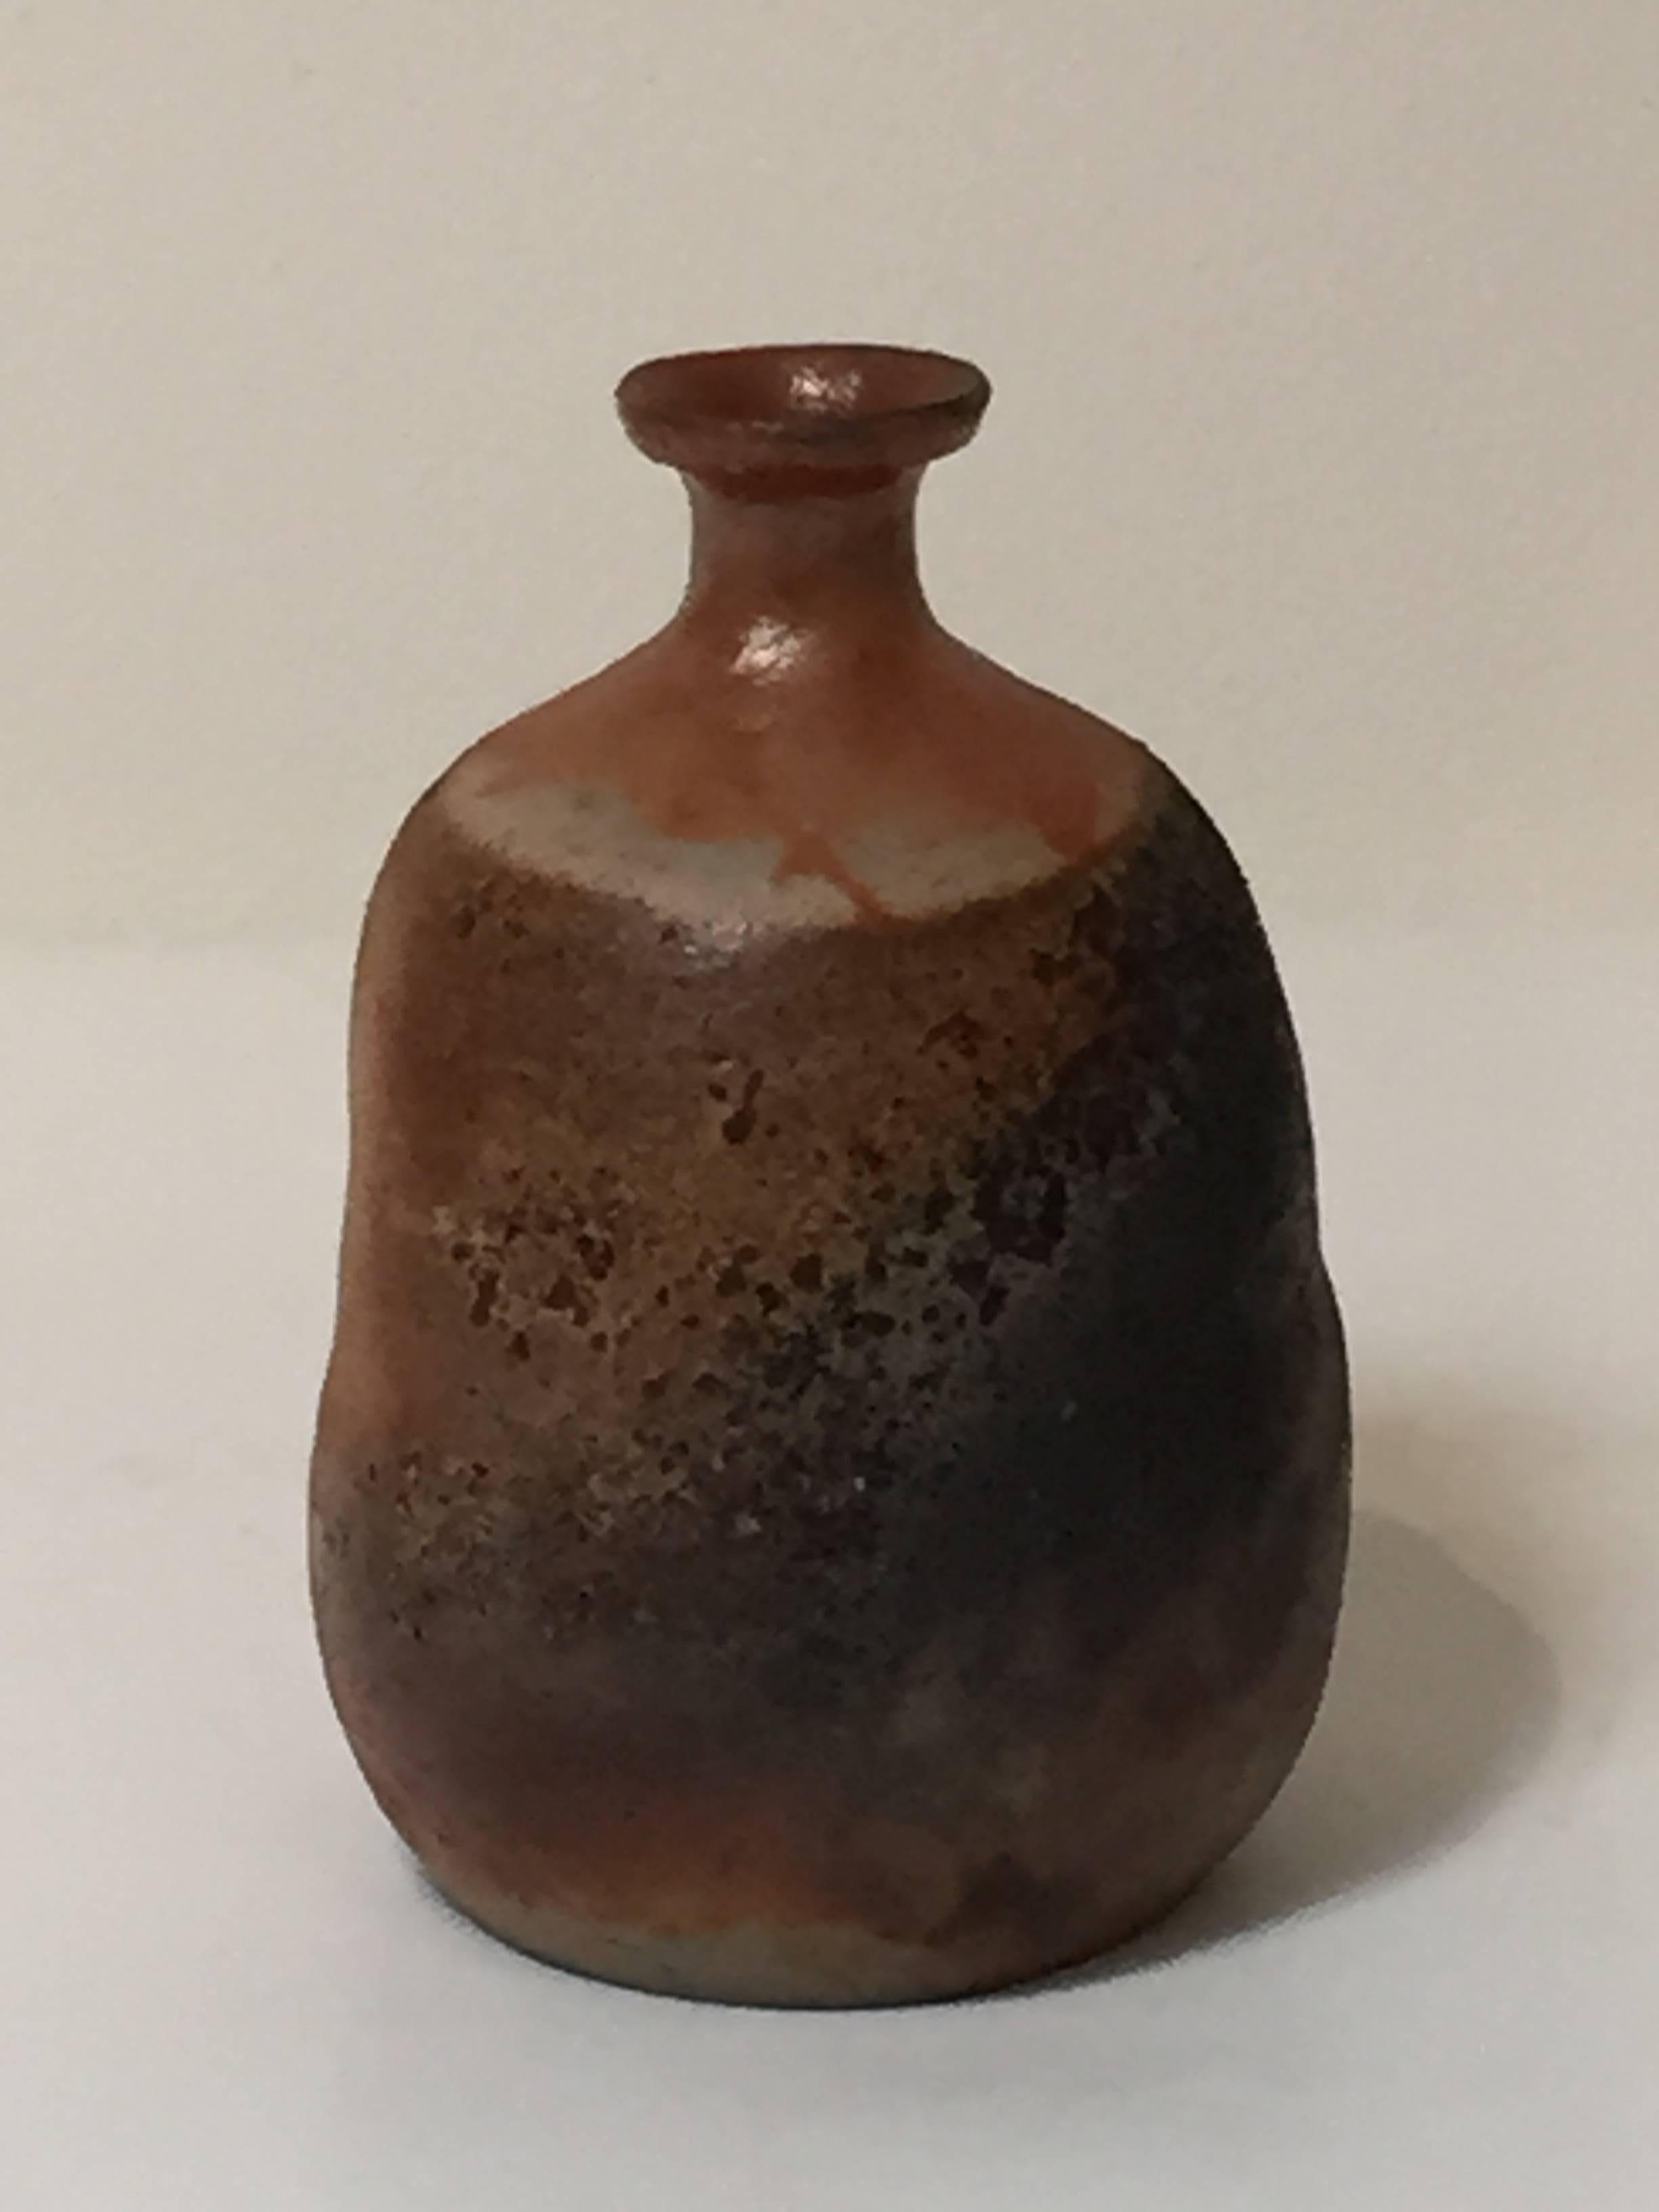 Pottery Contemporary Wood Fired Sake Flask by Bizen Potter Hiroyuki Wakimoto For Sale